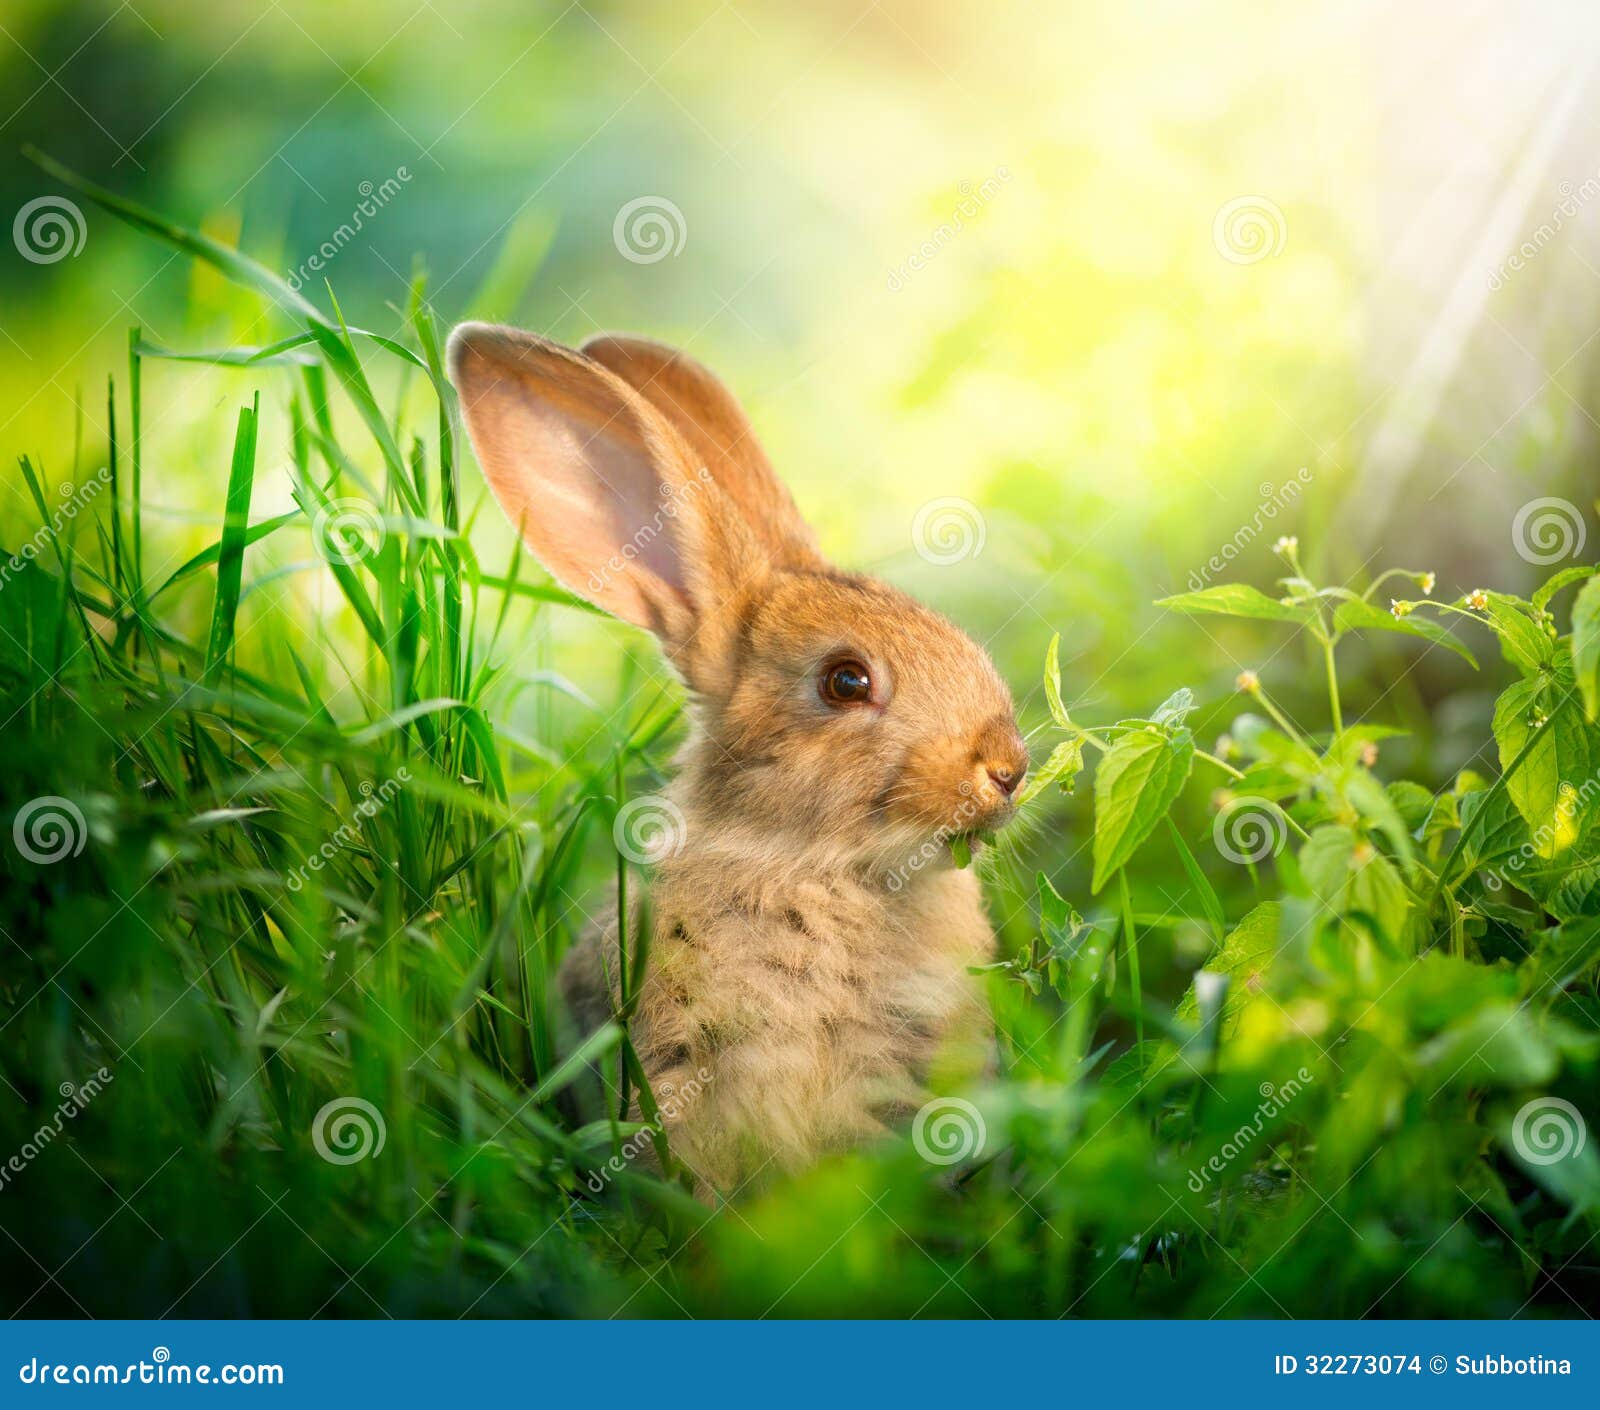 cute little easter bunny